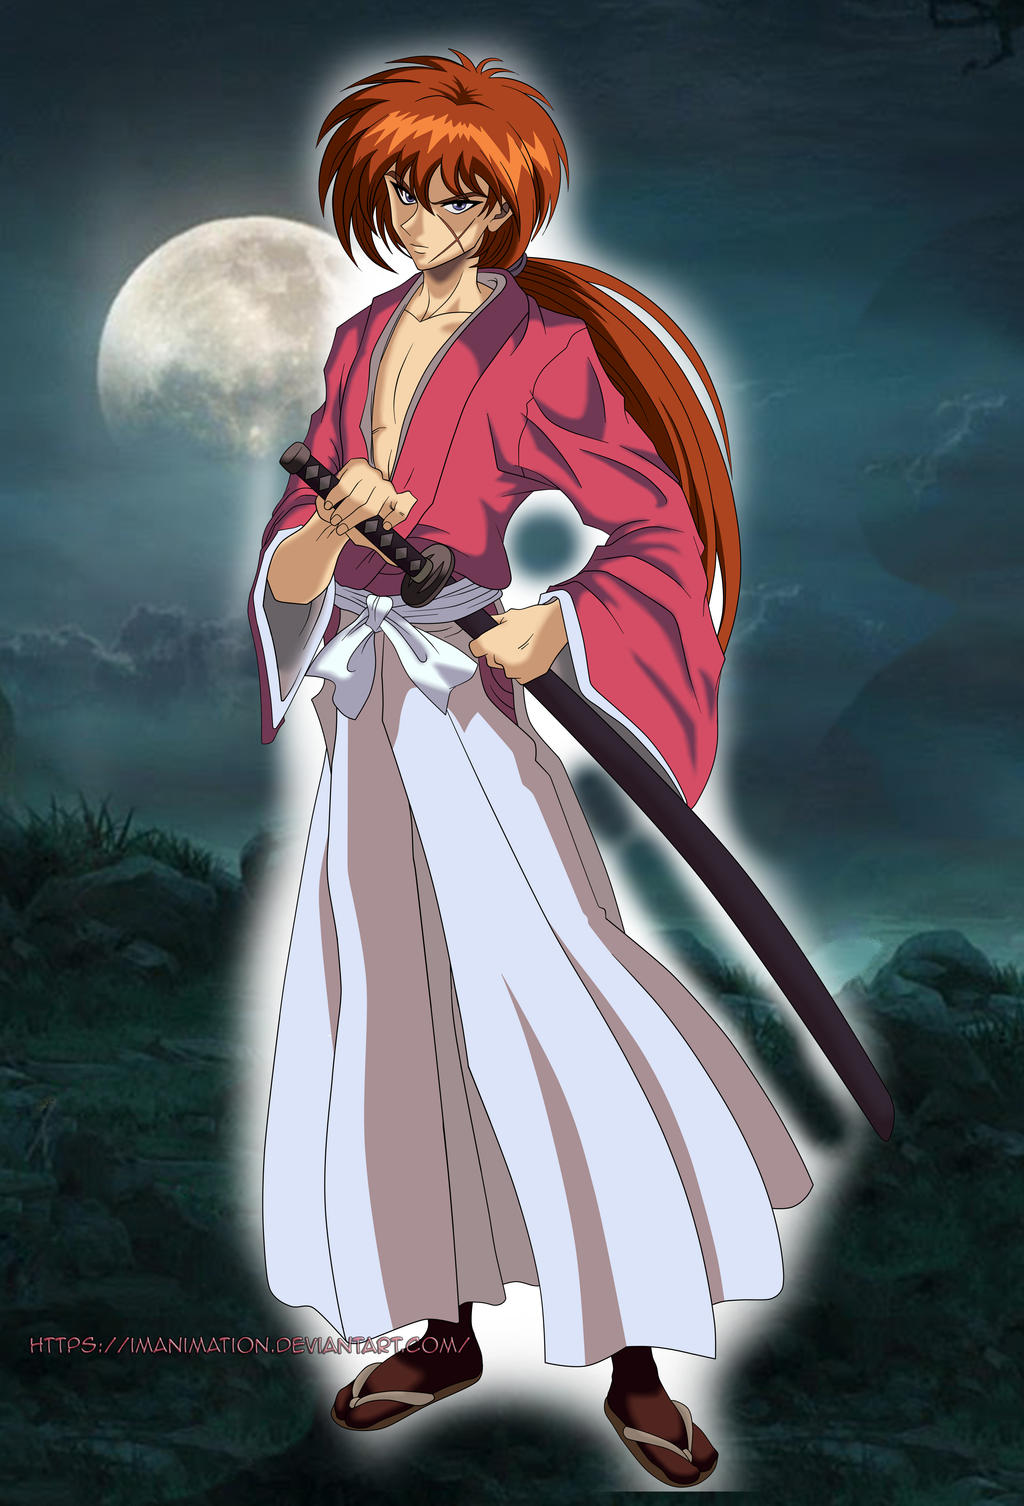 Rurouni Kenshin / Samurai X by Imanimation on DeviantArt